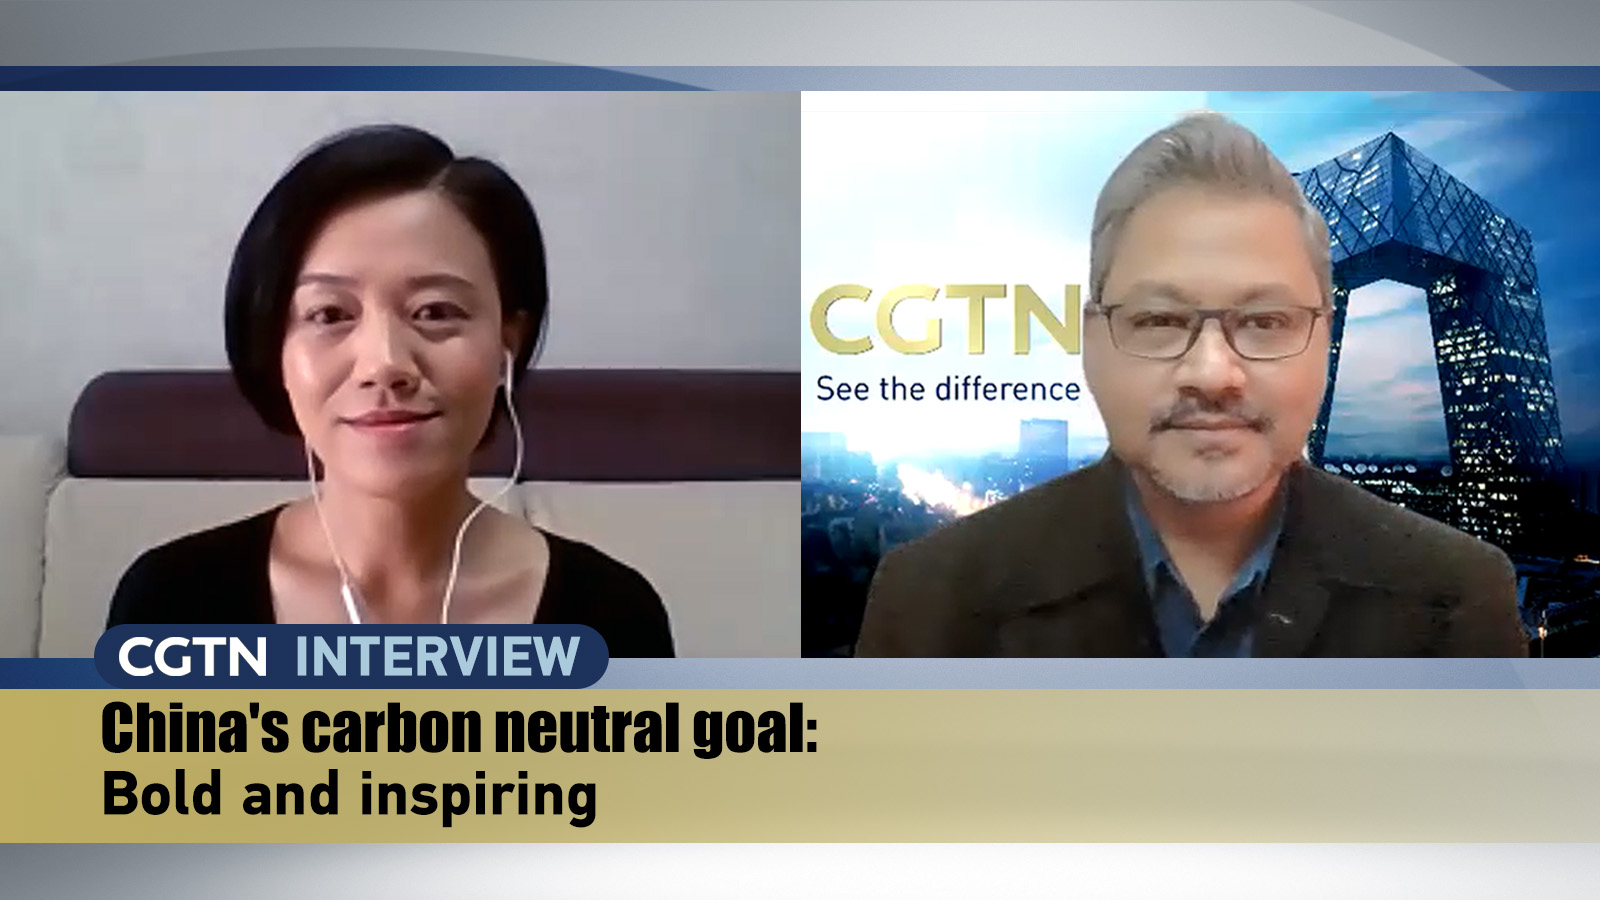 https://video.cgtn.com/news/2020-09-30/CGTN-Interview-China-s-carbon-neutral-goal-Bold-and-inspiring-Udf6ncOty0/video/791922542d05430bb19fe1ae4927726e/791922542d05430bb19fe1ae4927726e.jpg